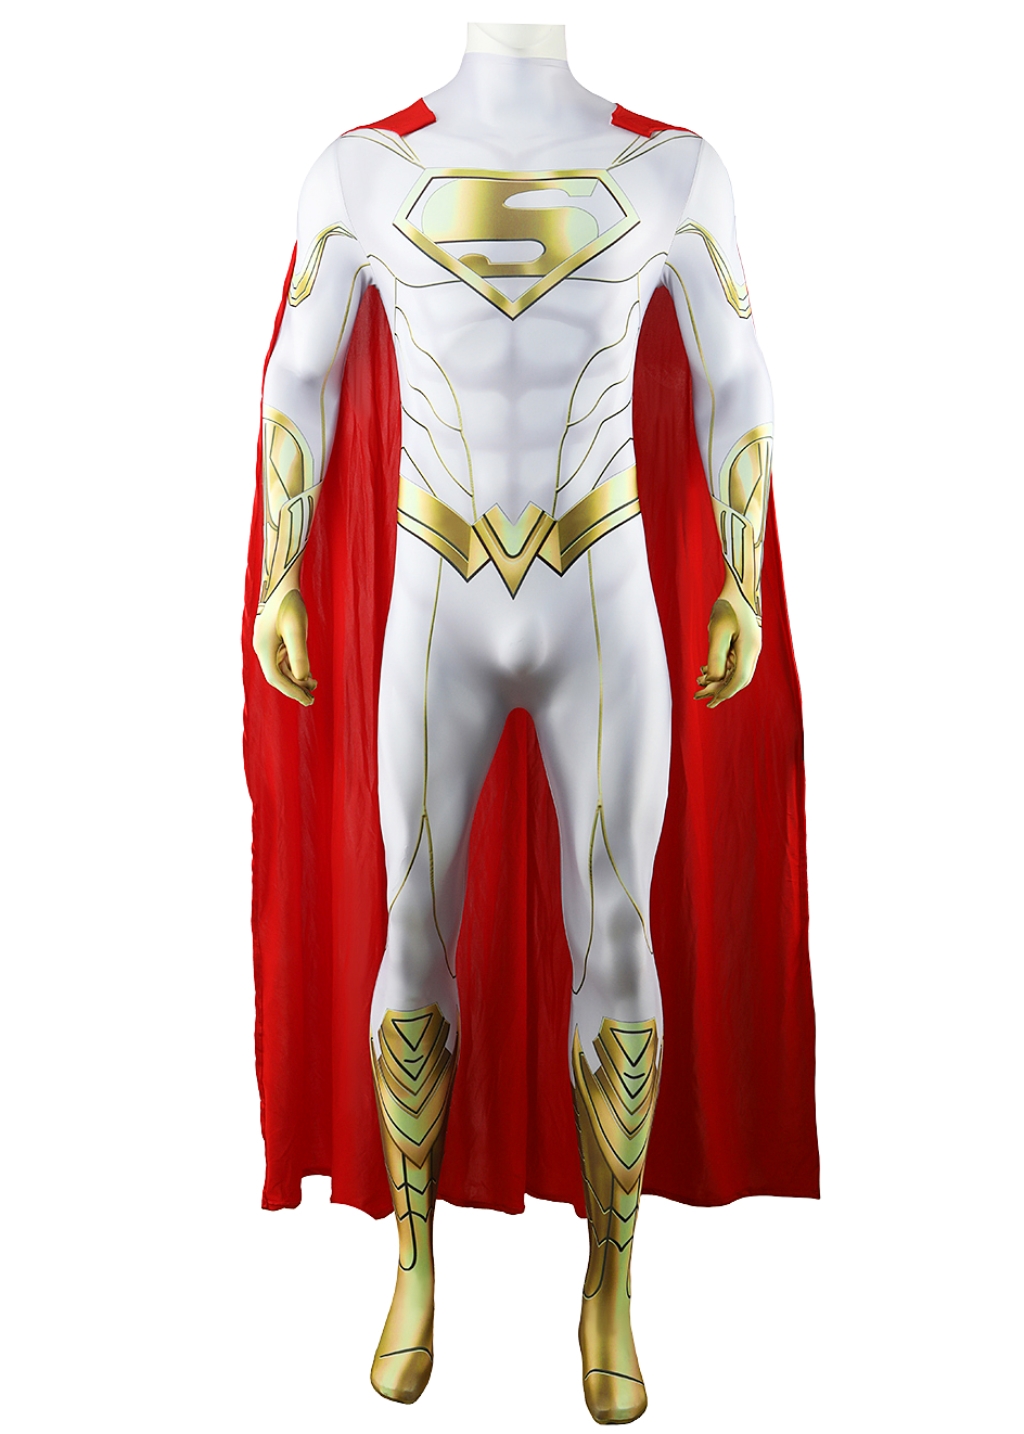 Man of Steel Costume Superman Bodysuit Cosplay White Ver for Adult Kids